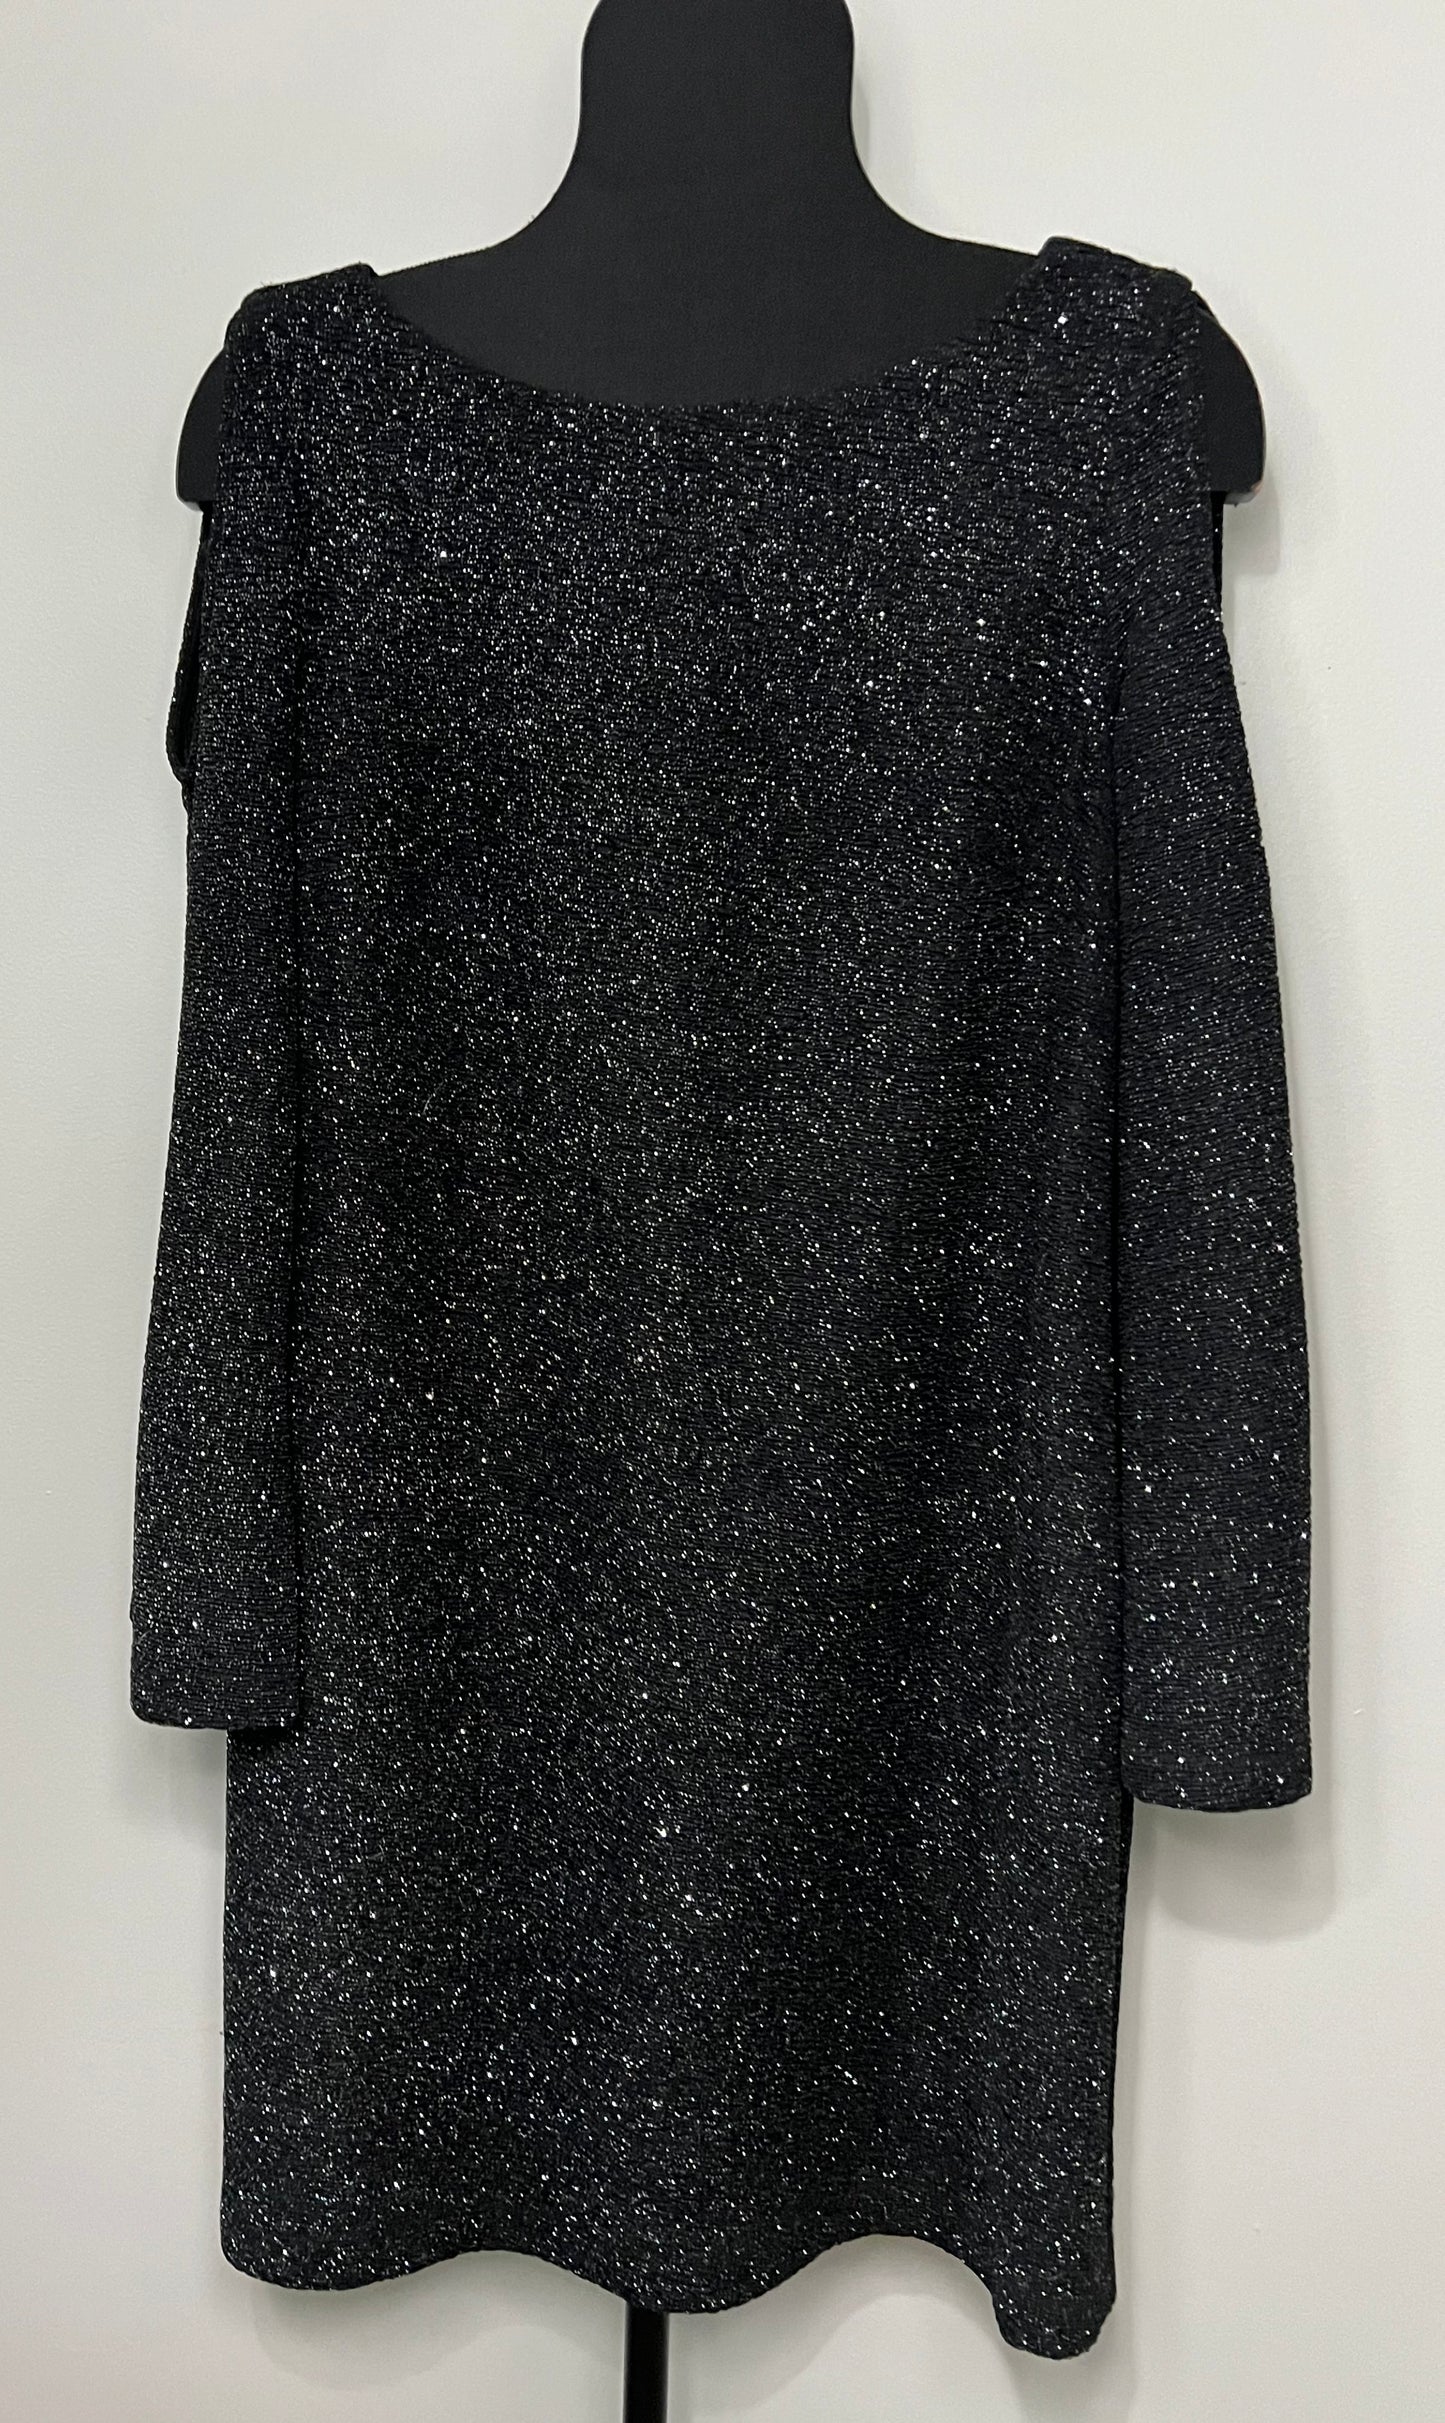 Women’s - size 14 - metallic black dress - VGUC